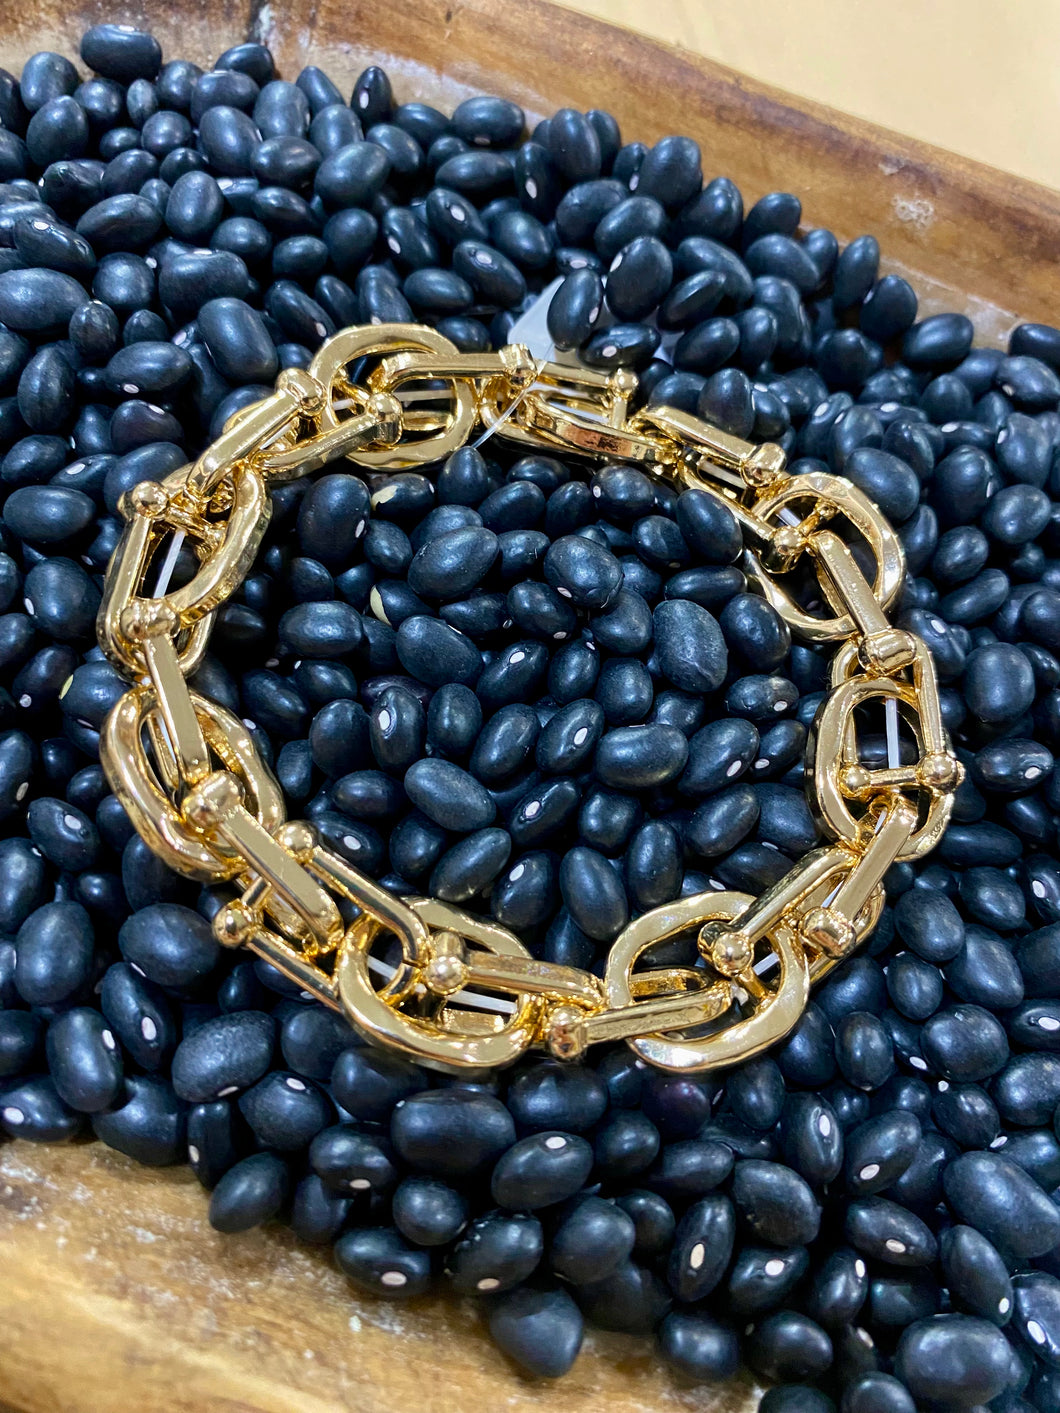 Gold Stretch Chain Bracelet